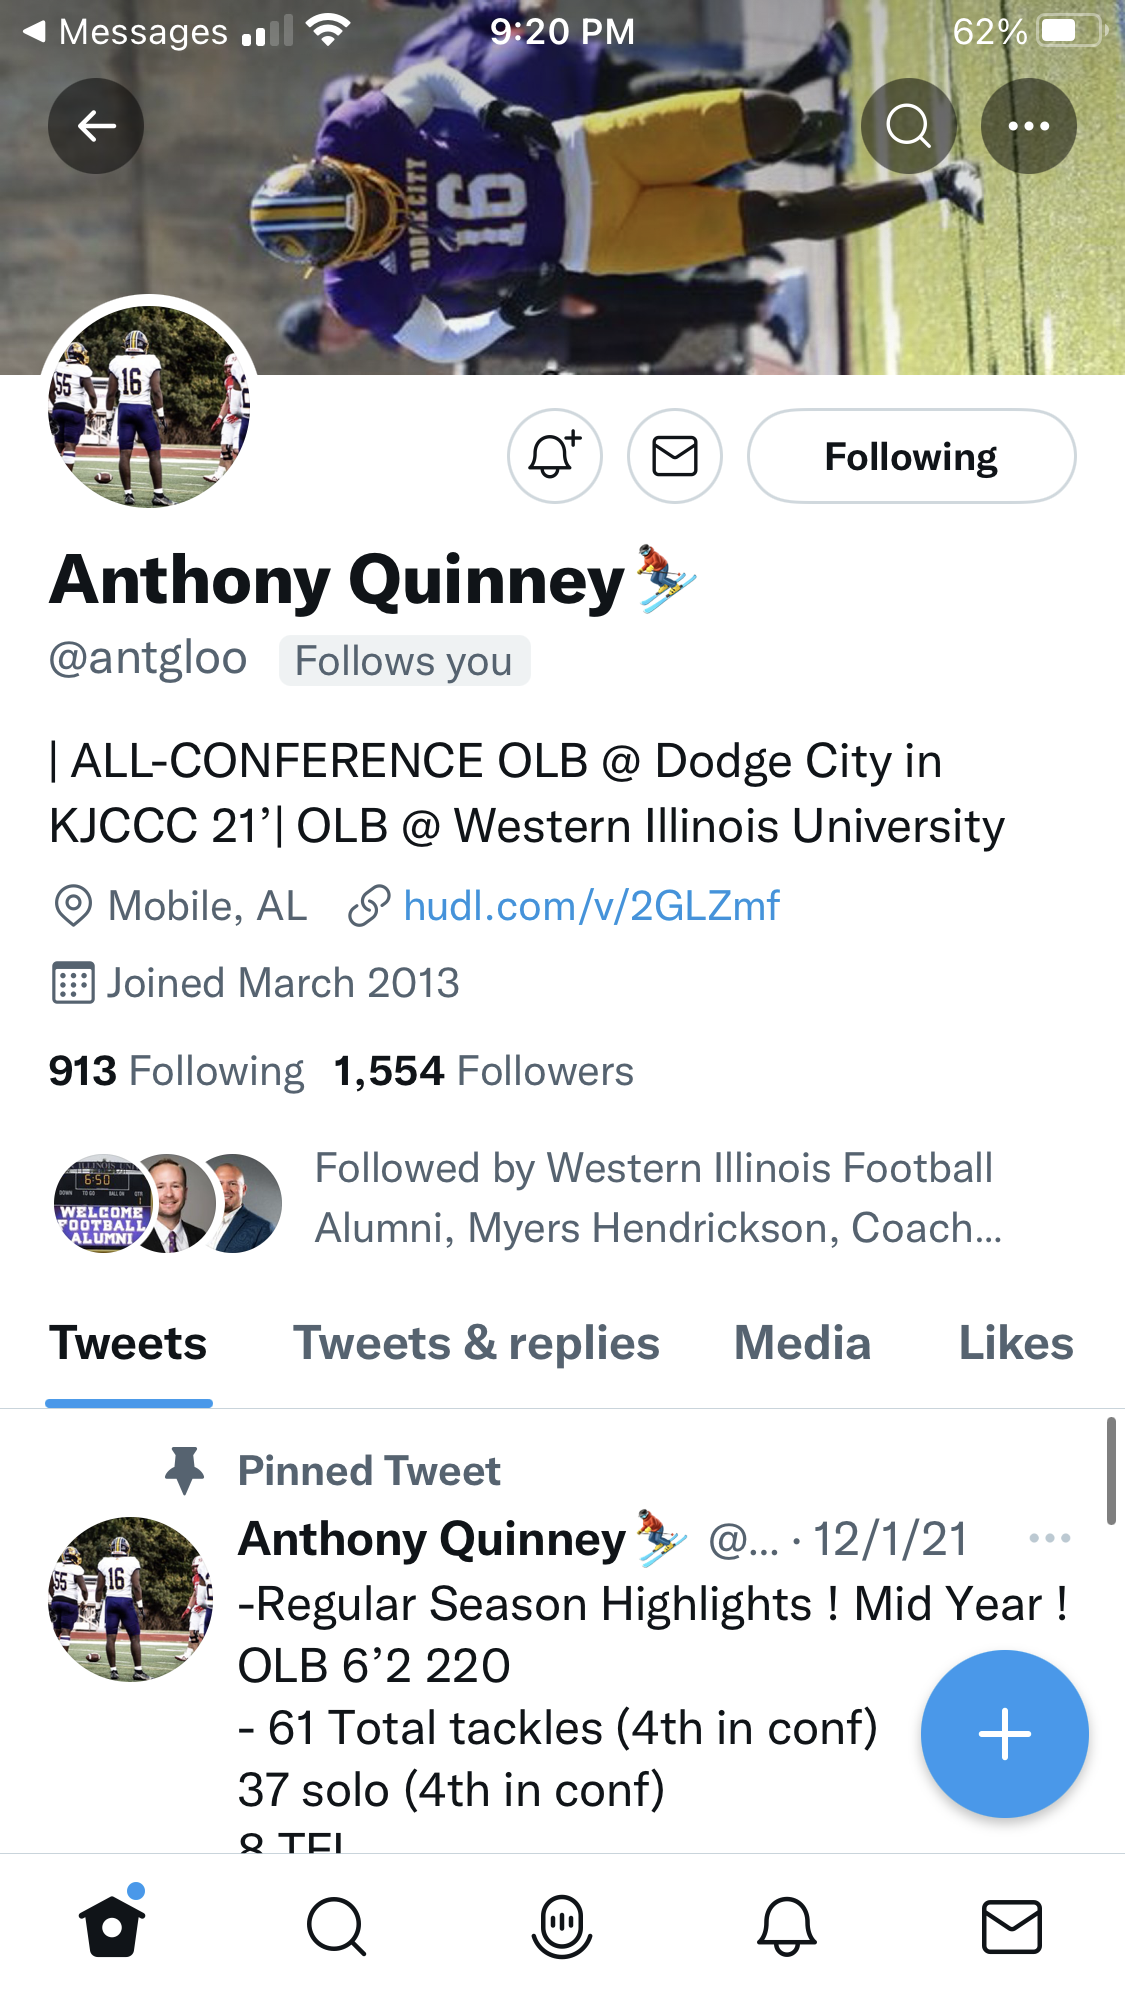 Anthony Quinney